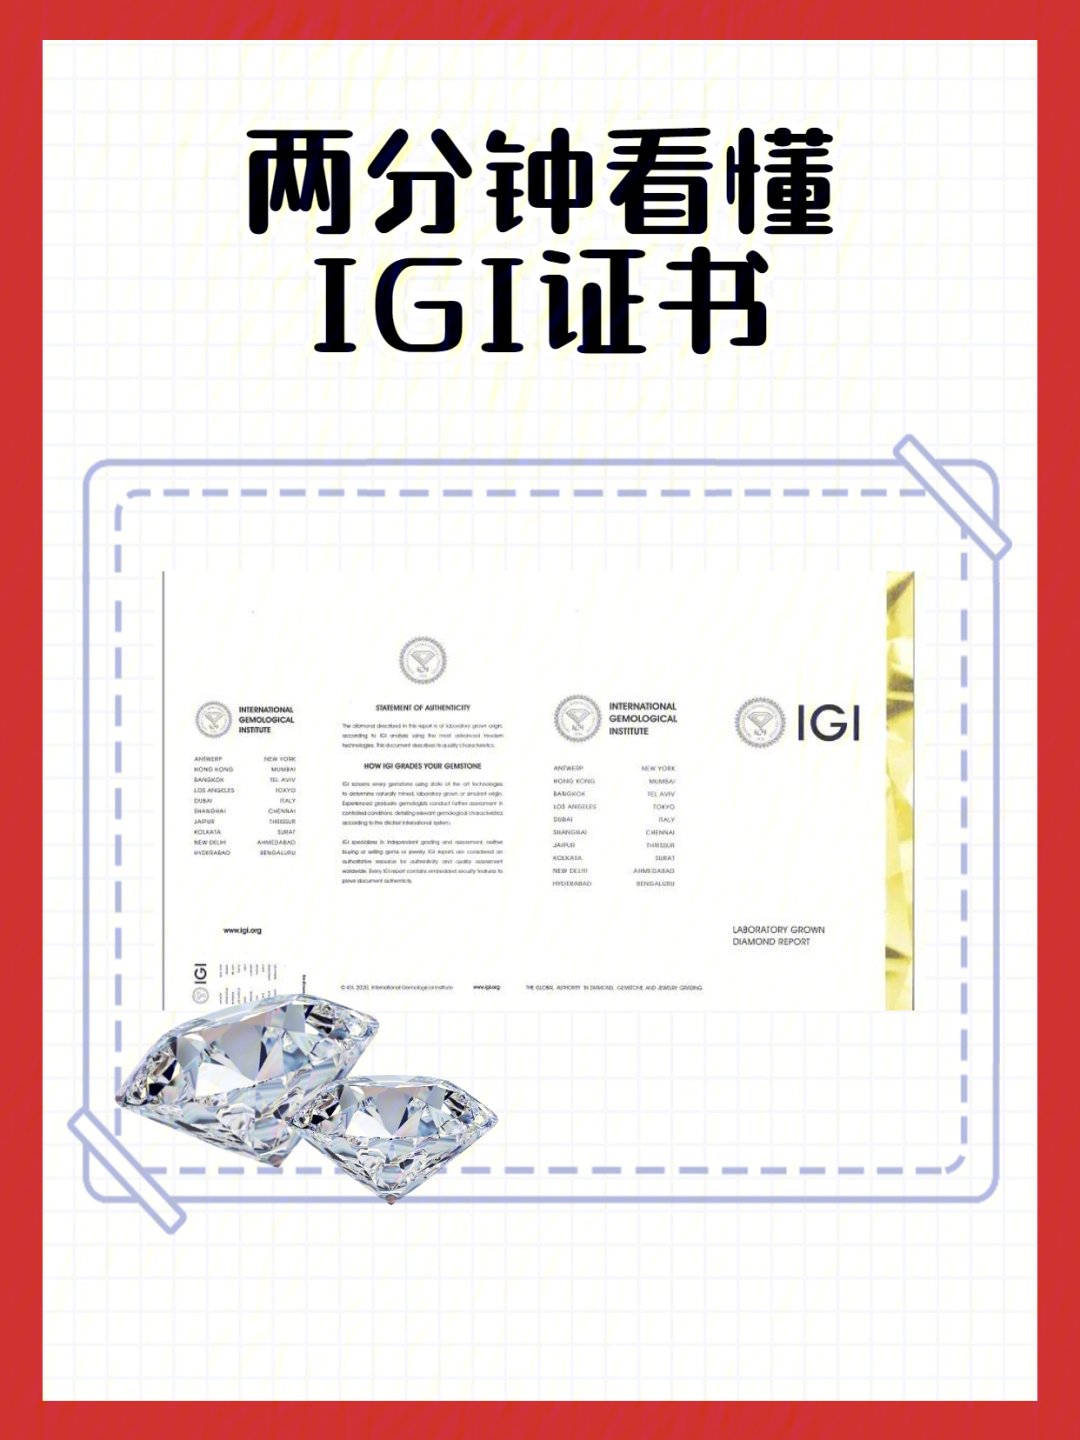 idi,hrd,ngtc等,其中igi证书是培育钻石使用最为广泛的94证书